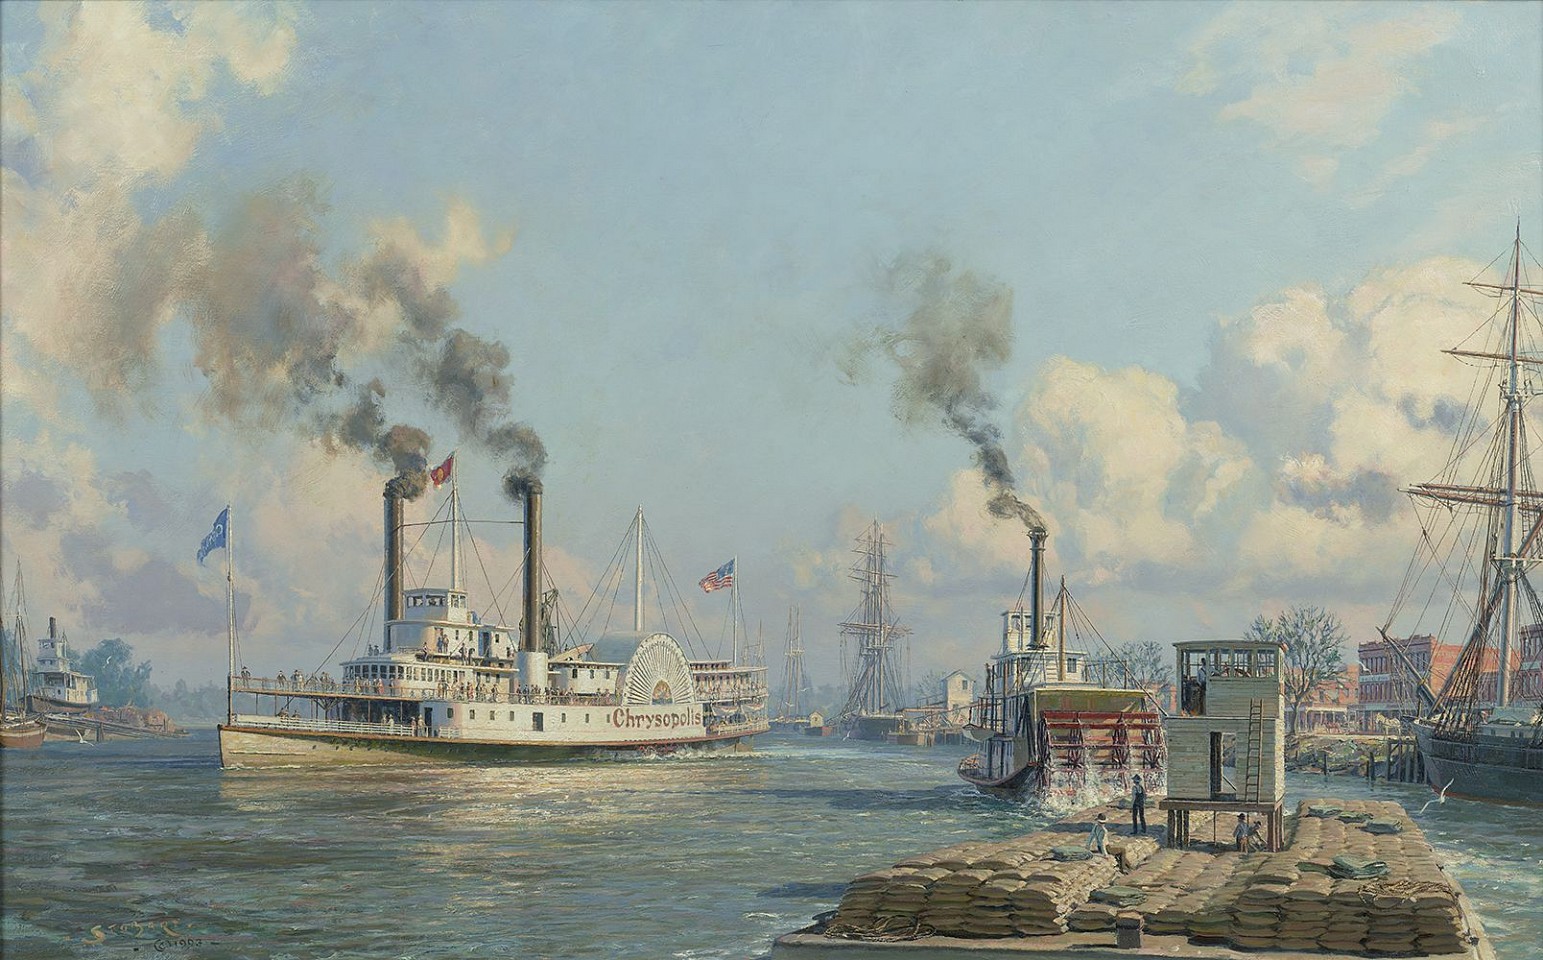 John Stobart, Sacramento: The Celebrated River Steamer ""Chrysopolis"" Leaving San Francisco in 1870, 1993
oil on canvas, 20 x 32 in. (50.8 x 81.3 cm)
JS1030